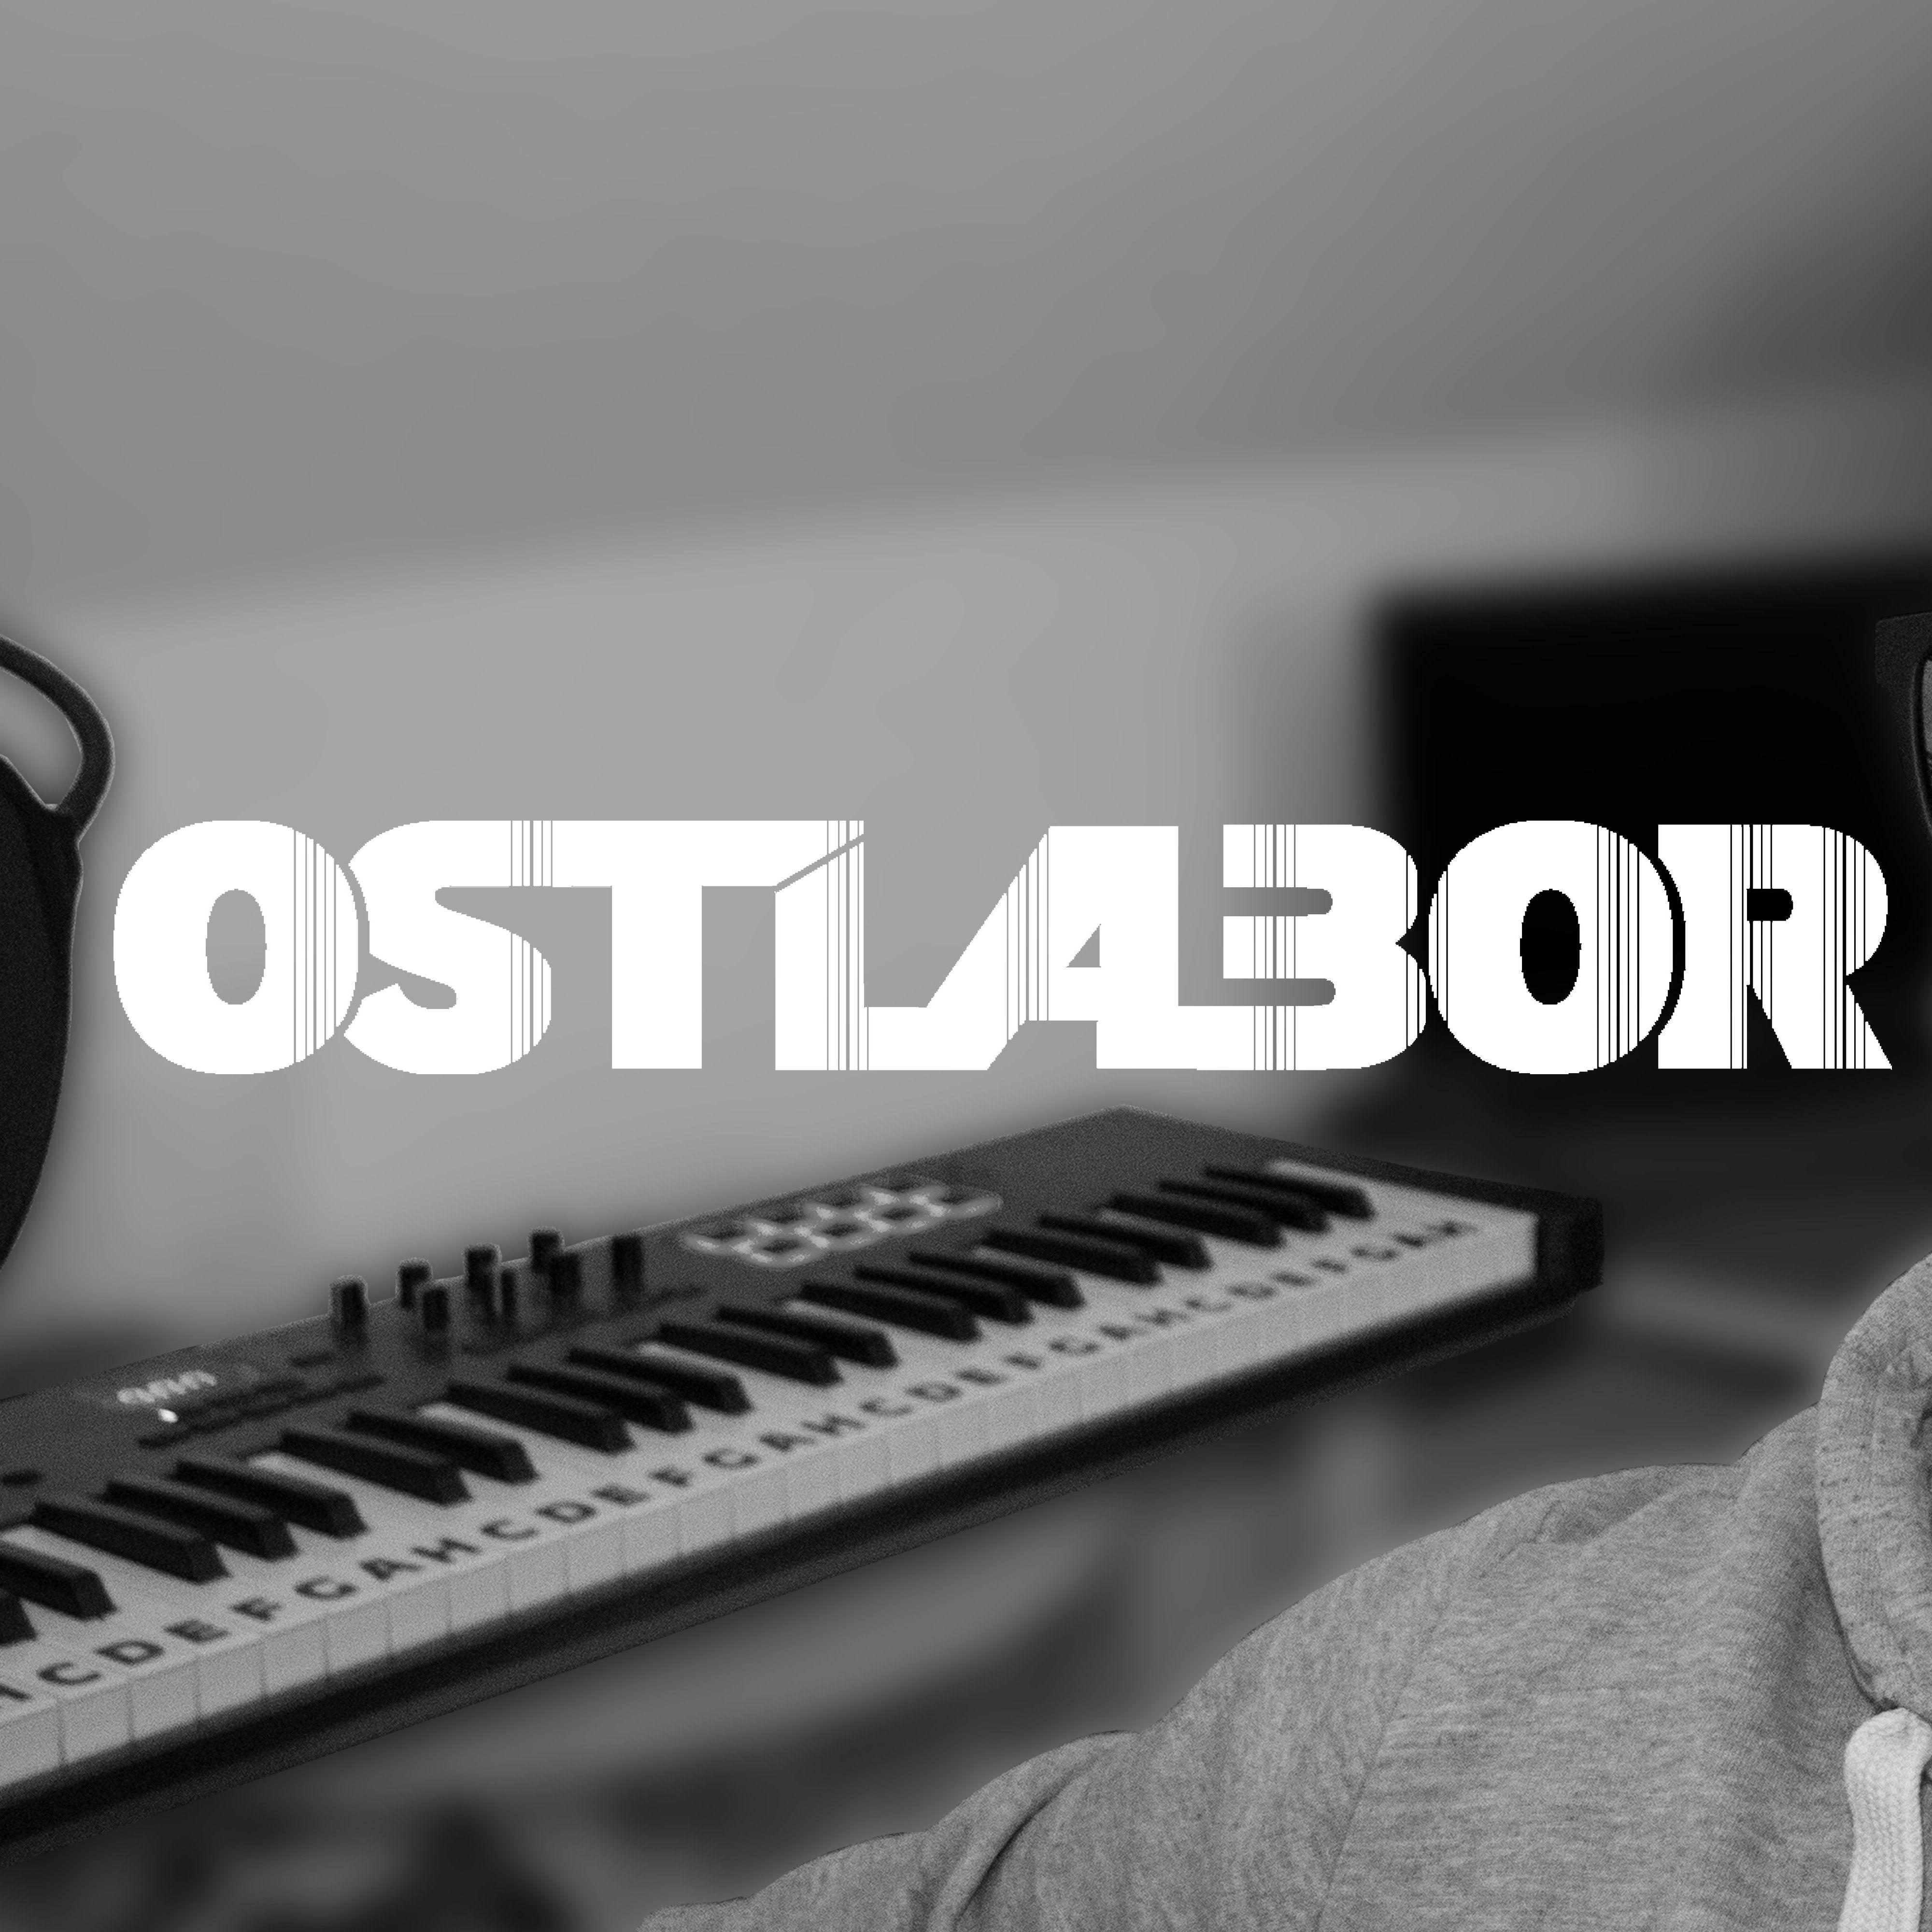 Player Ostlabor avatar